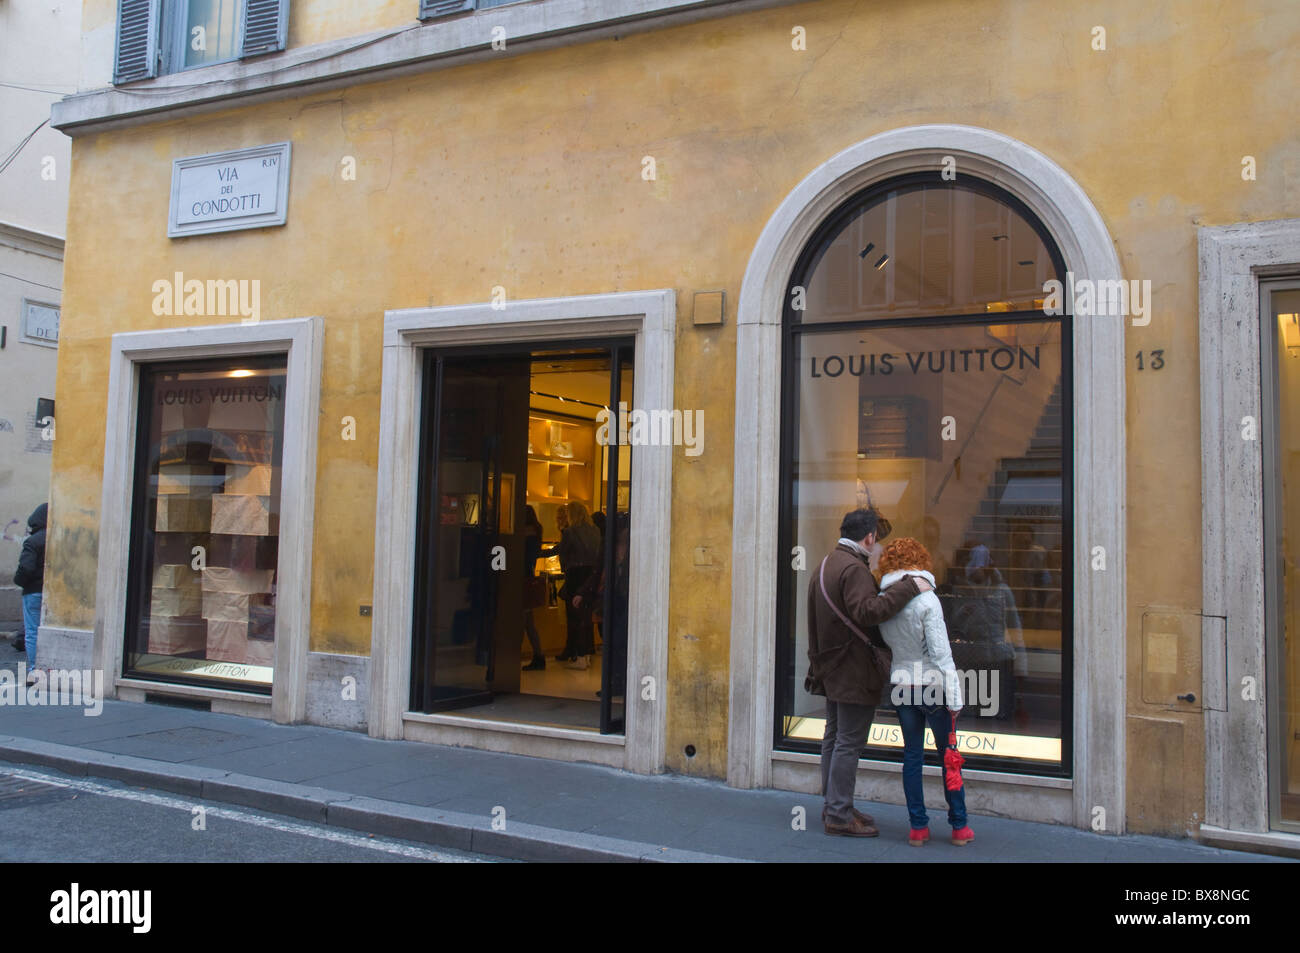 Louis Vuitton-Geschäft entlang der Via dei Condotti Straße Tridente Bezirk  Rom Italien Europa Stockfotografie - Alamy